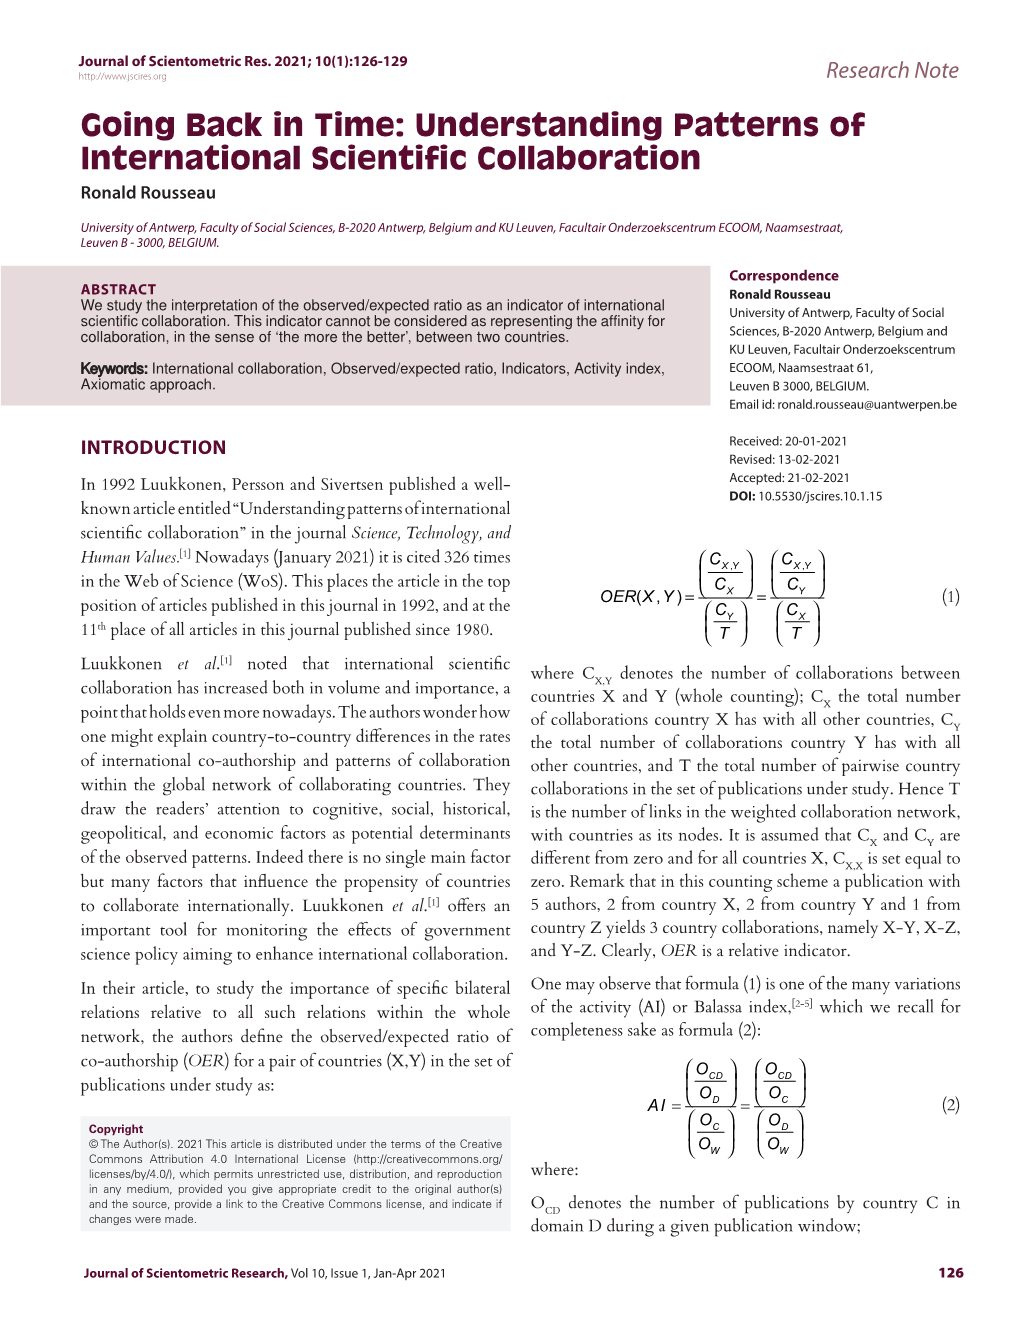 Understanding Patterns of International Scientific Collaboration Ronald Rousseau